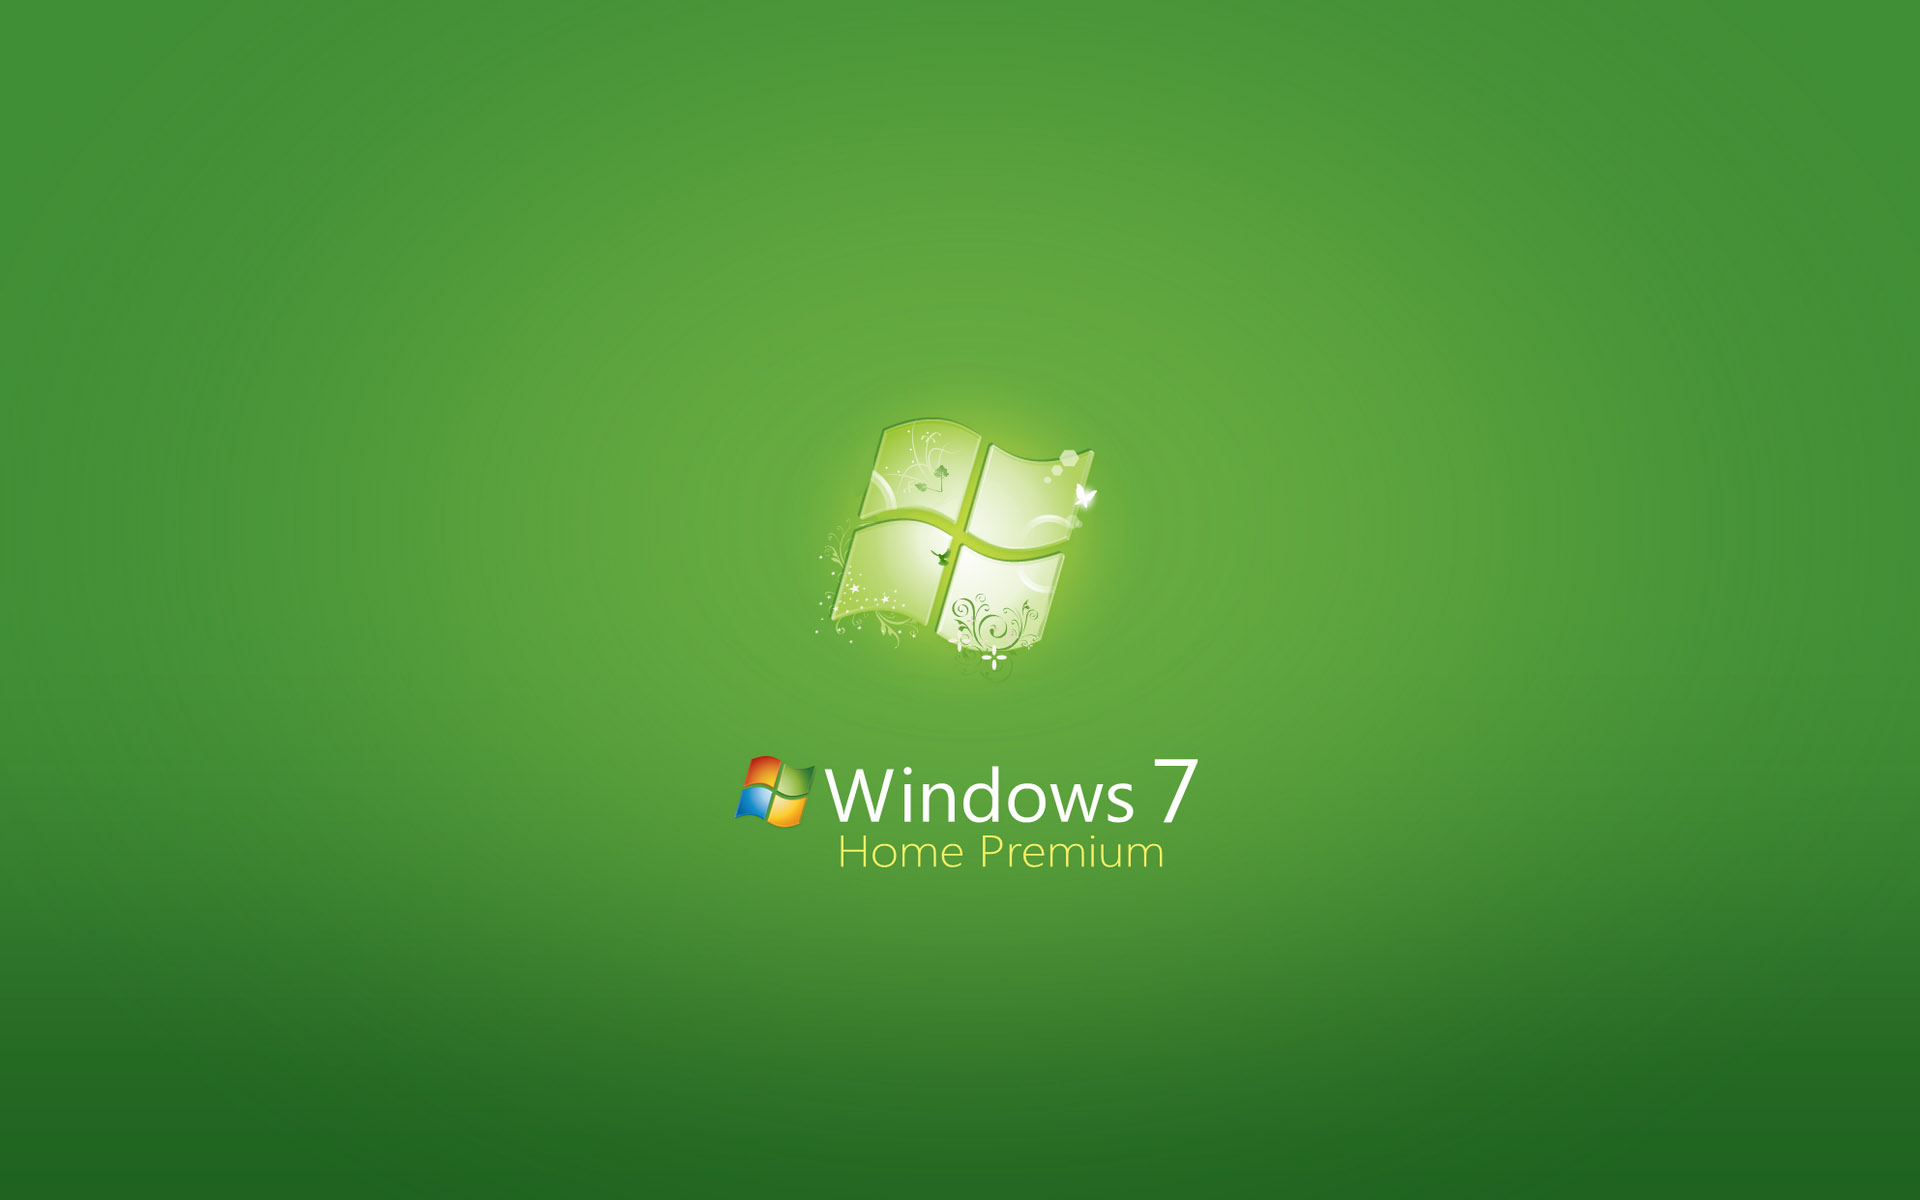 Hd Wallpapers Cool Windows 7 Free Wallpaper - Windows 7 Wallpaper Hd - HD Wallpaper 